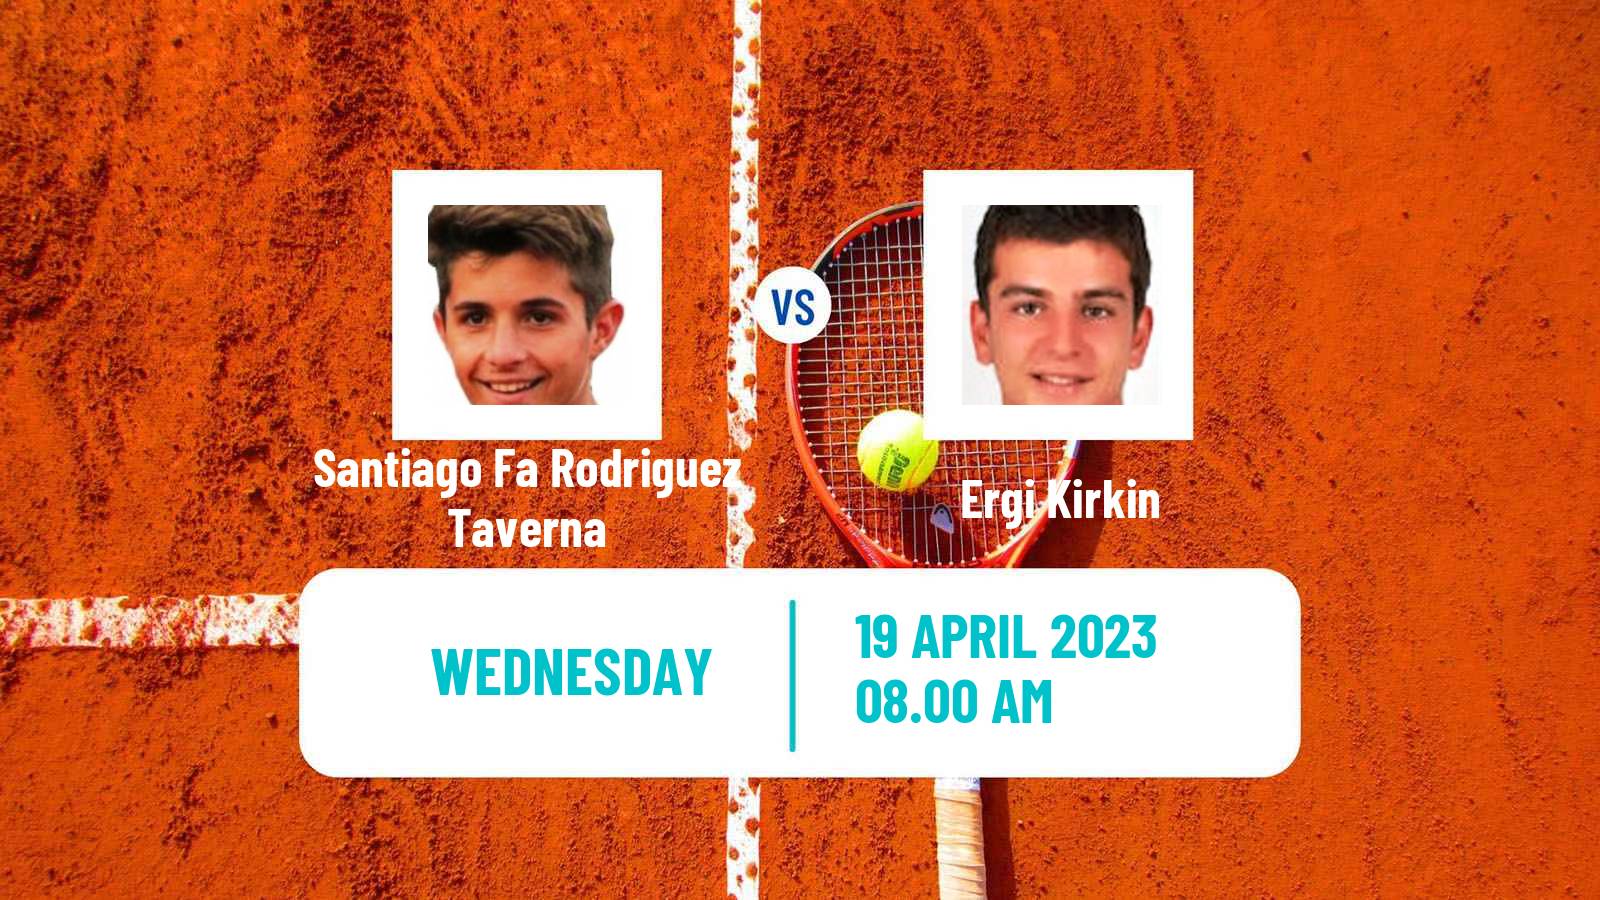 Tennis ATP Challenger Santiago Fa Rodriguez Taverna - Ergi Kirkin